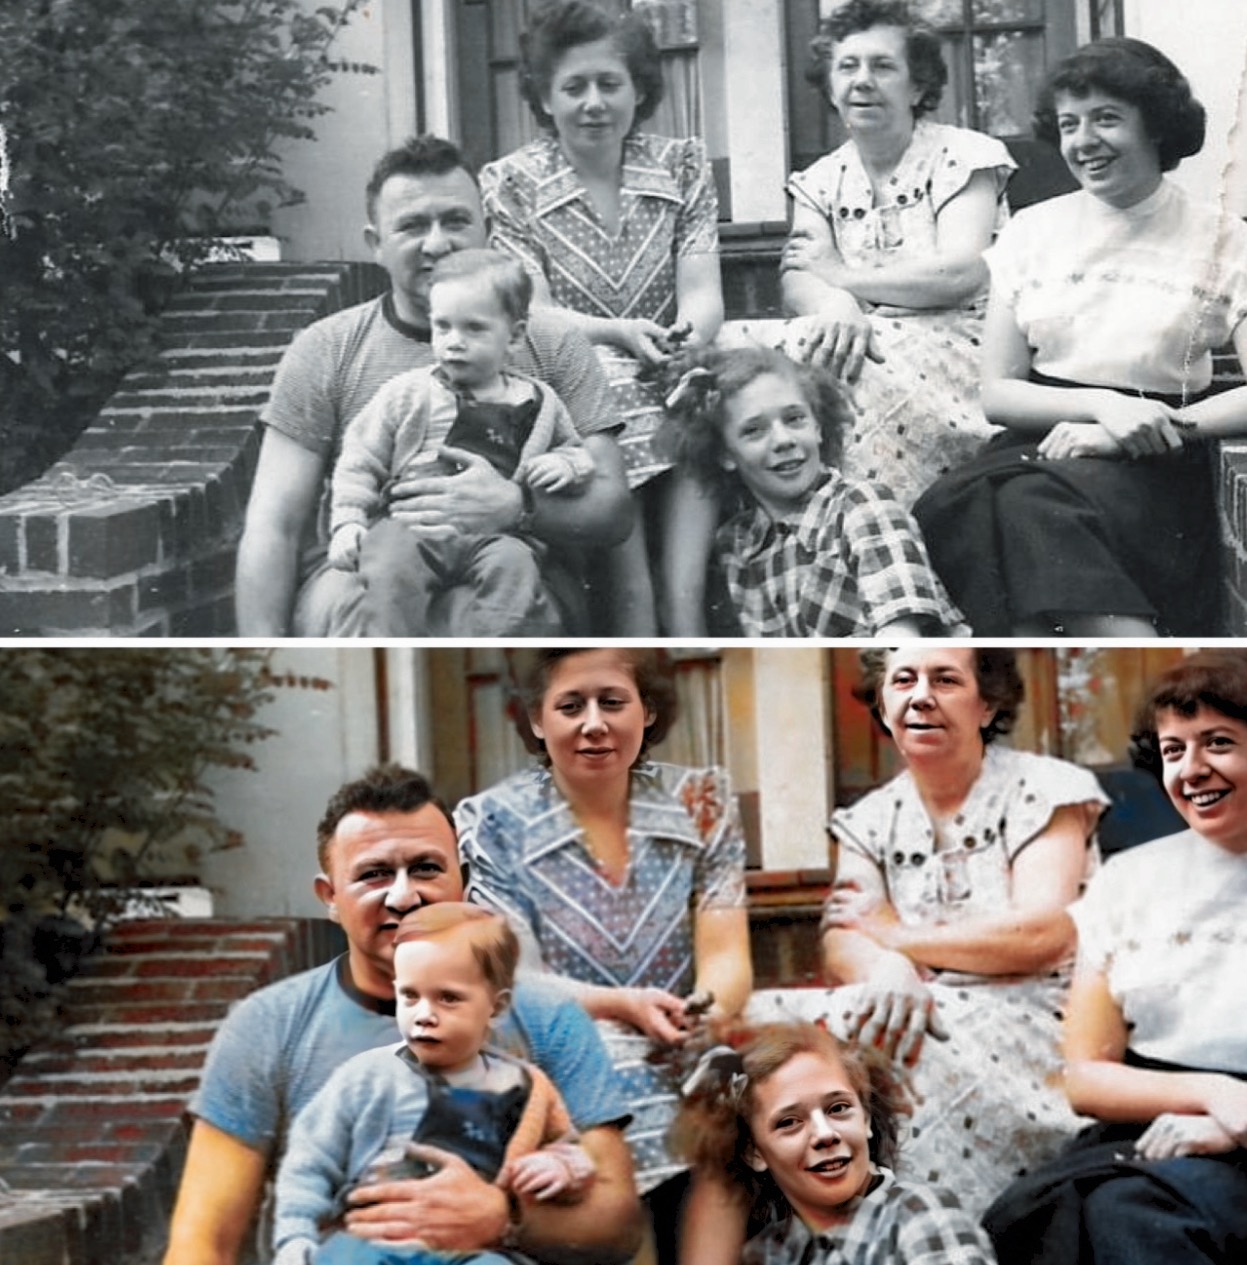 1949 - 3 generations